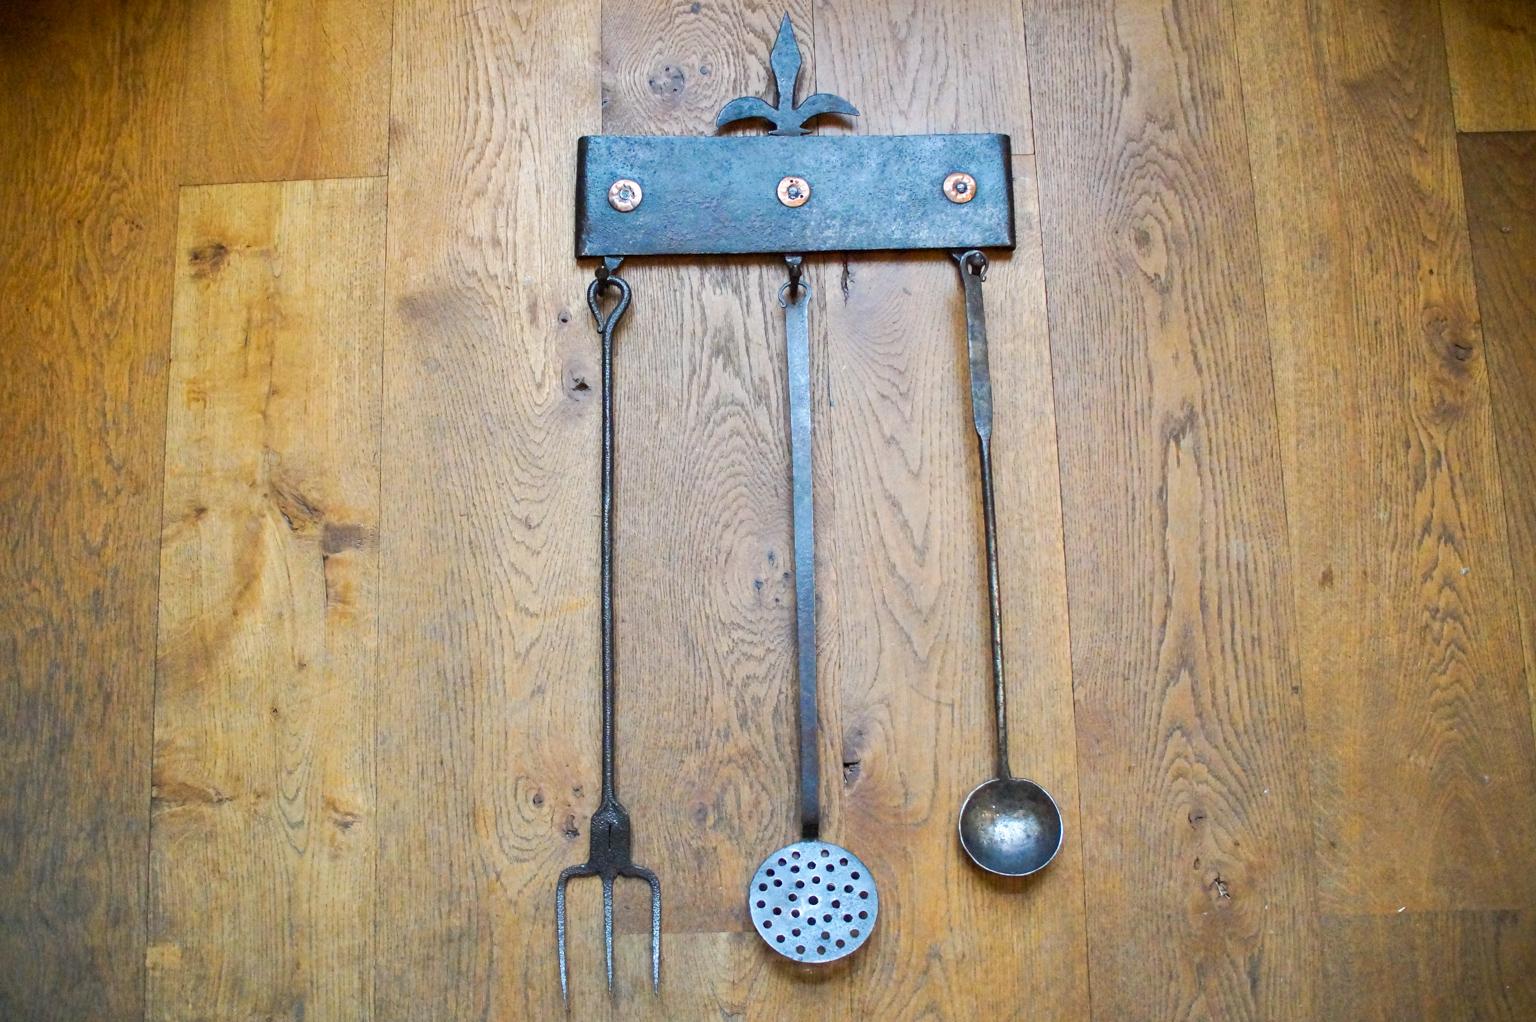 17th century tools